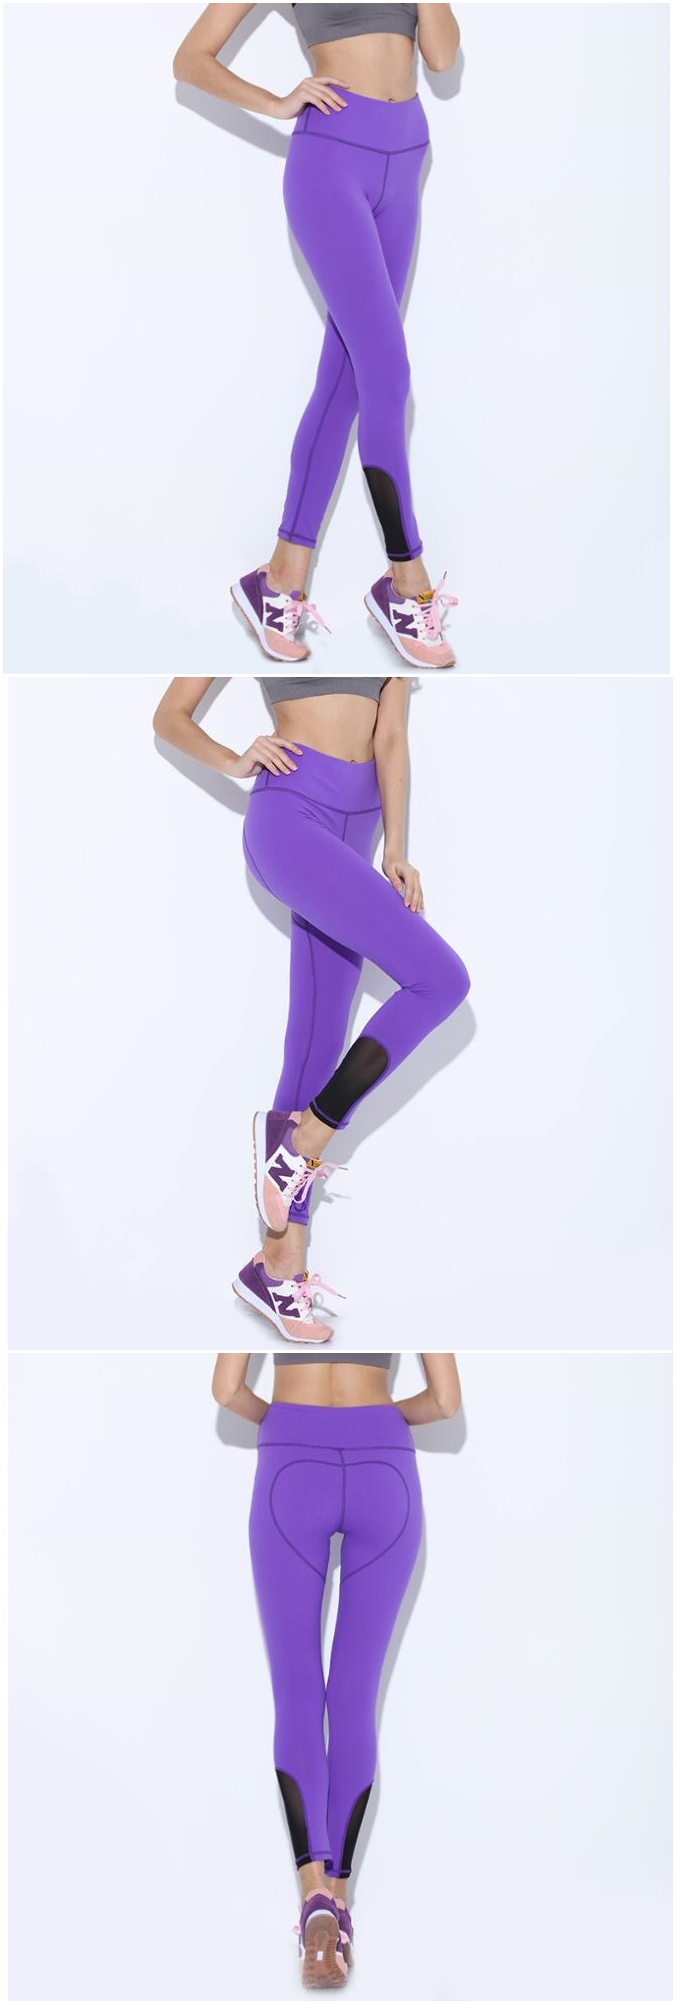 High-Waist-Women-Heart-Sport-Legging-Breathable-Quick-Dry-Elastic-Fitness-Running-Pants-1082690